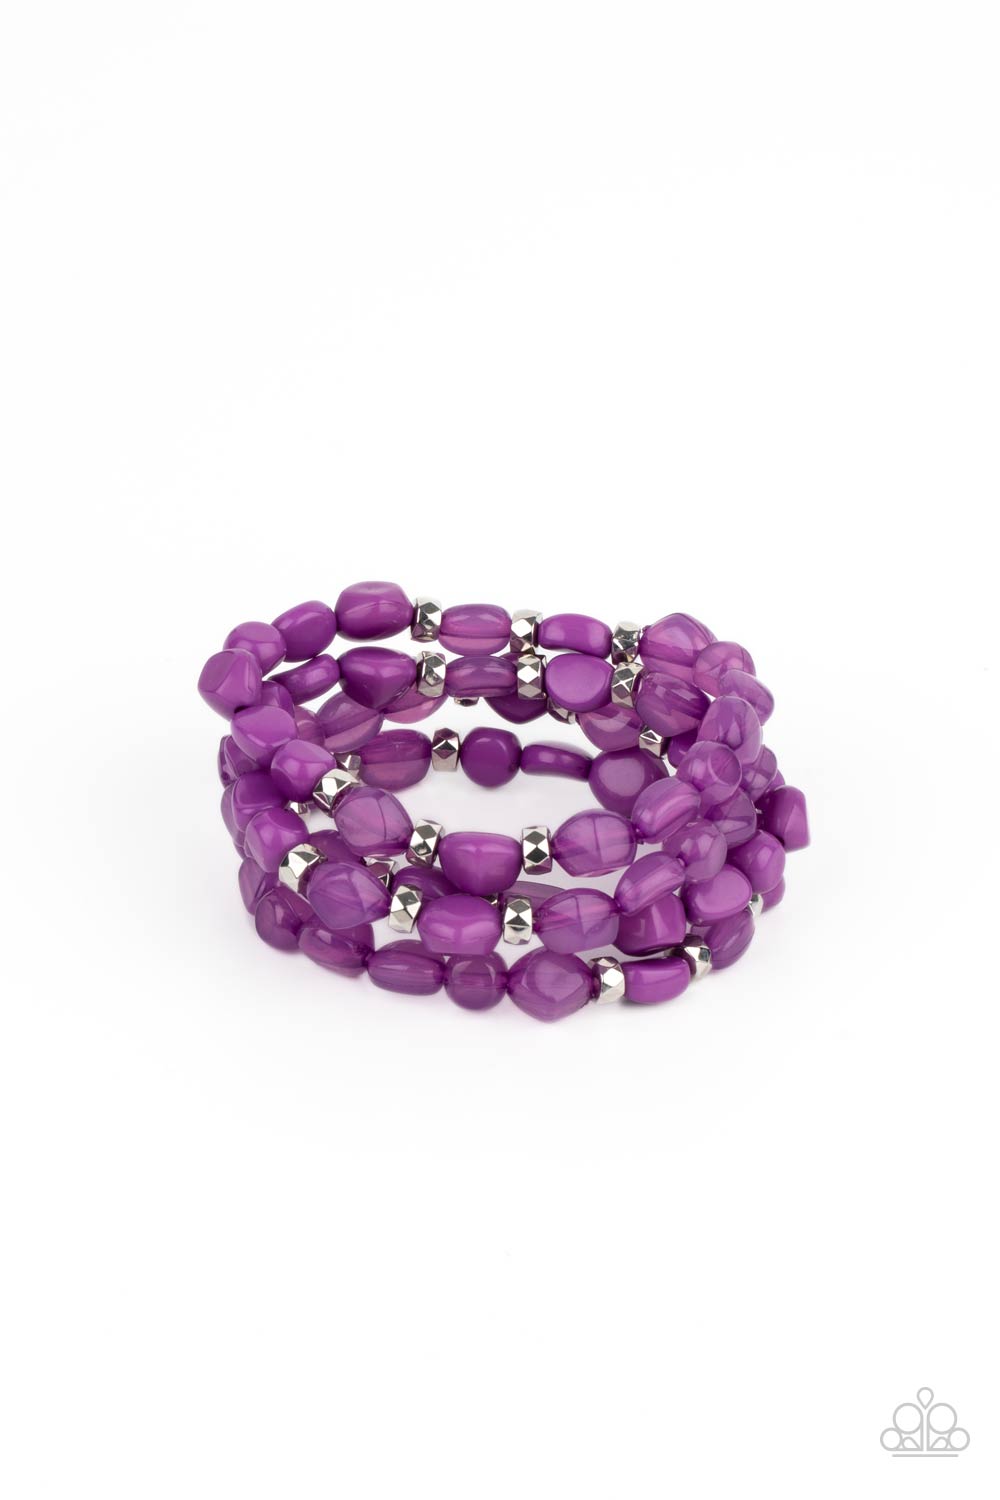 Paparazzi - Nice GLOWING! - Purple Bracelet